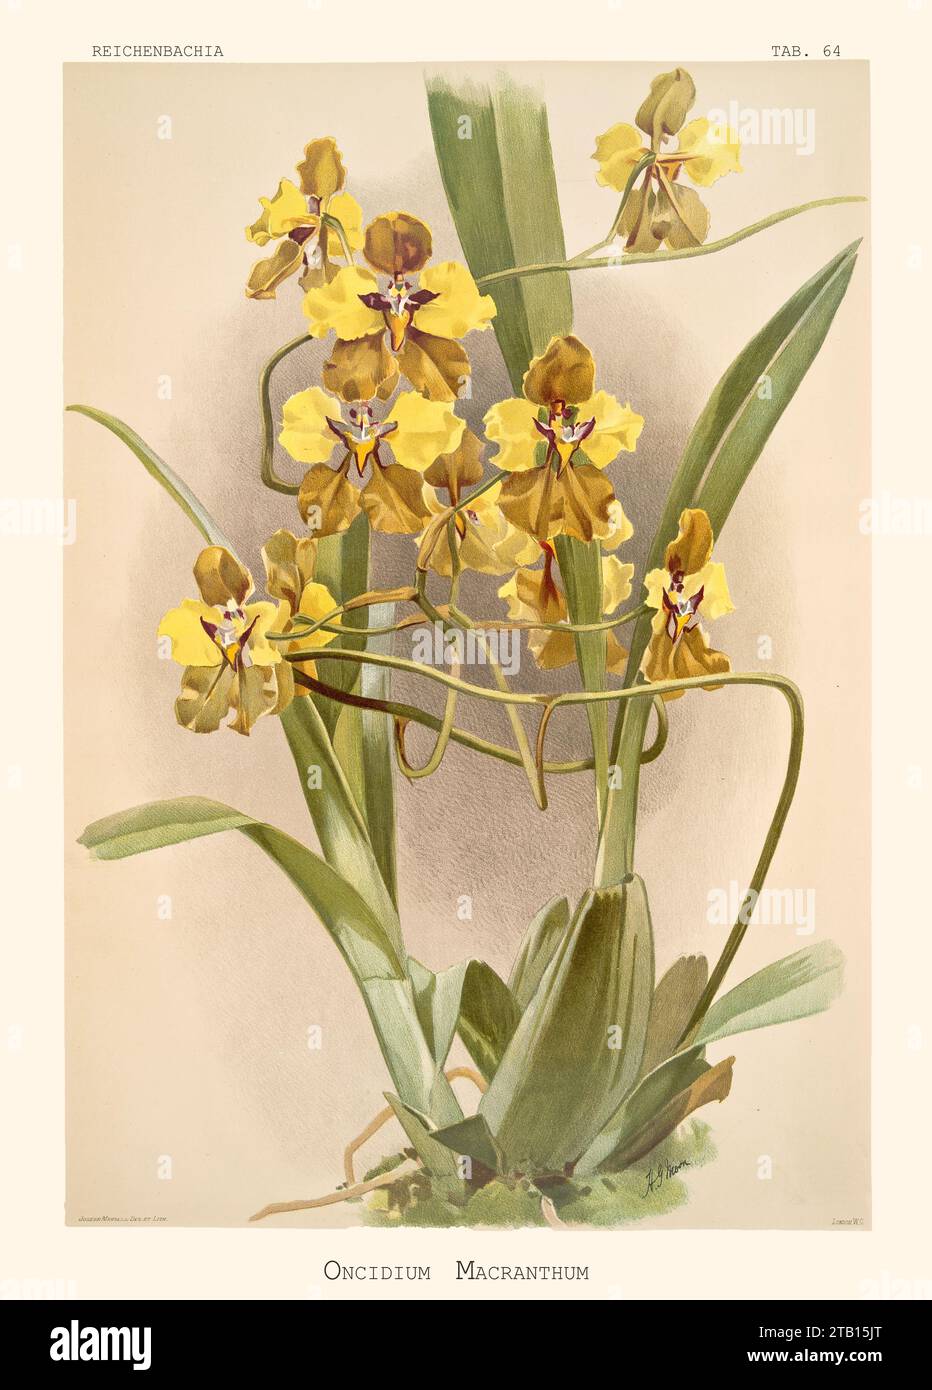 Old illustration of  Large Flowered Cyrtochilum (Cyrtochilum macranthum). Reichenbachia, by F. Sander. St. Albans, UK, 1888 - 1894 Stock Photo